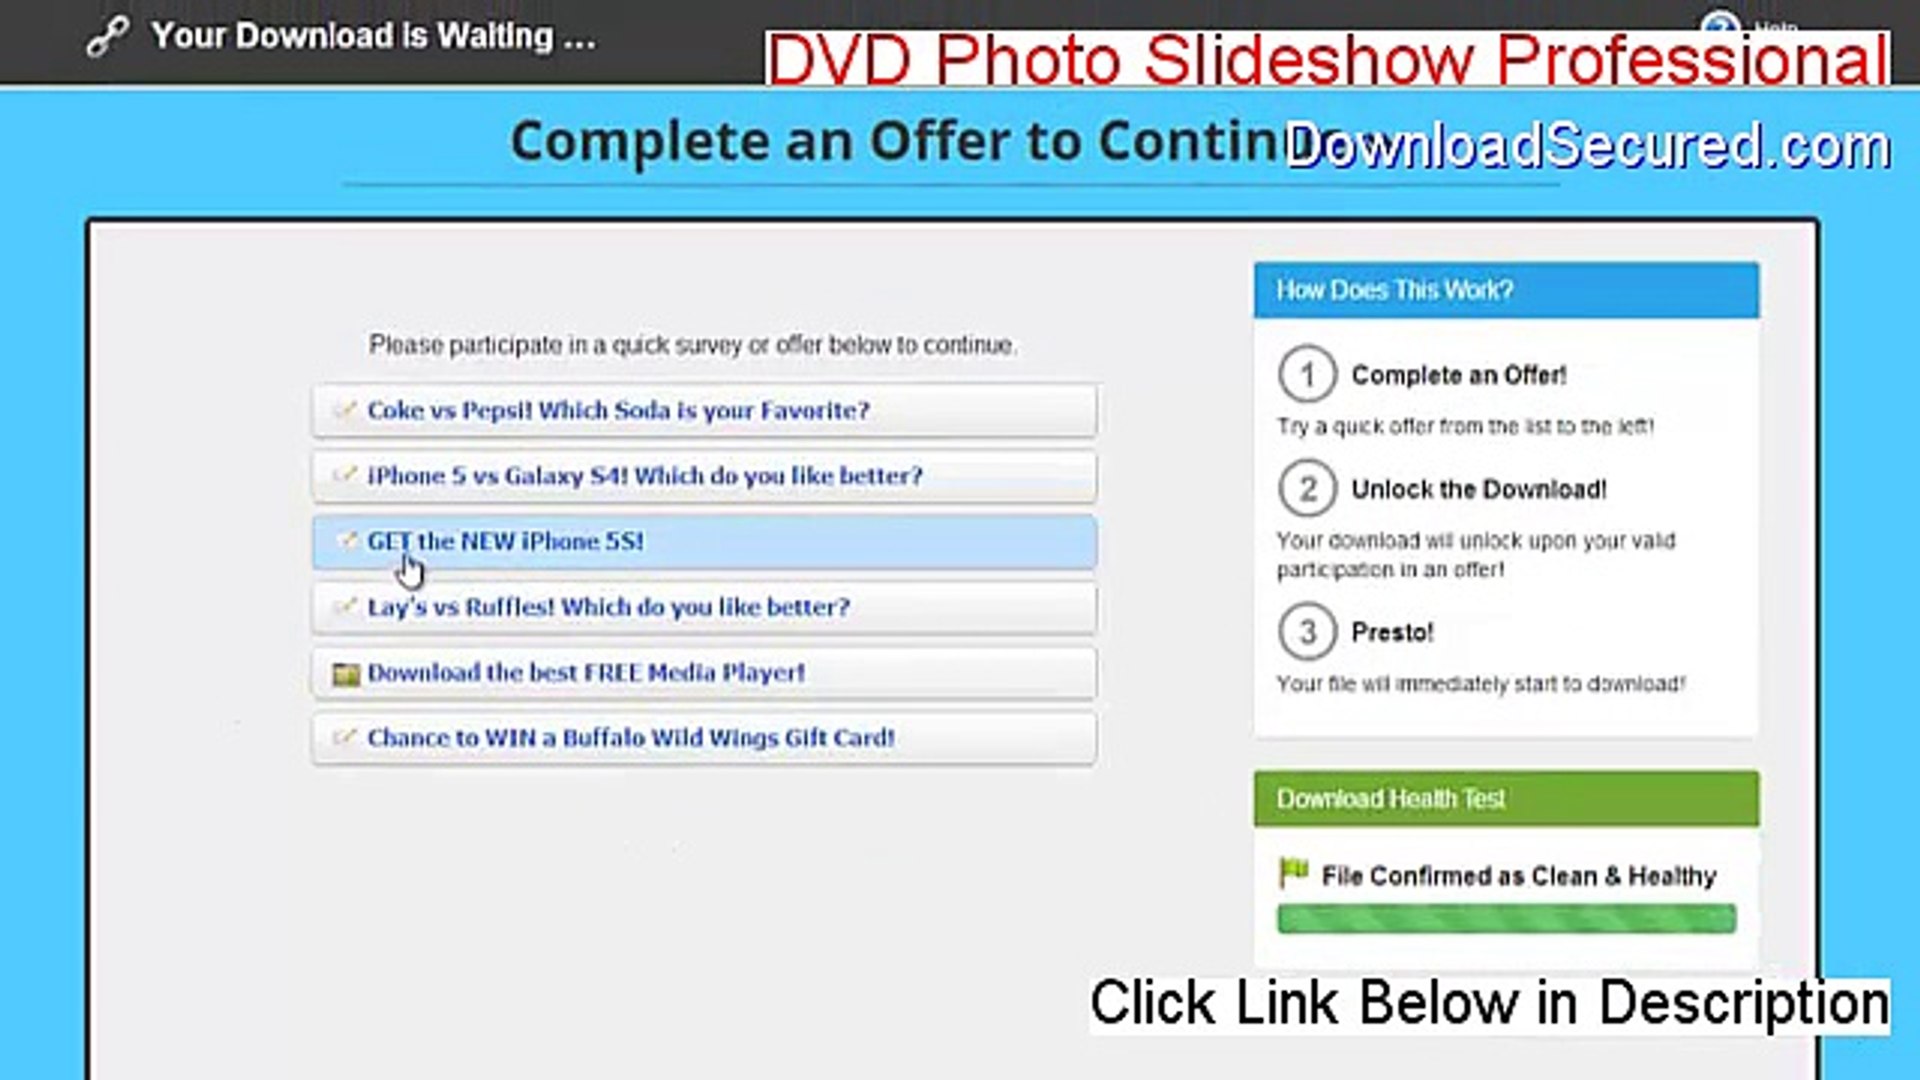 DVD Photo Slideshow Professional Full [dvd photo slideshow professional  8.07 registration key 2015] - video Dailymotion